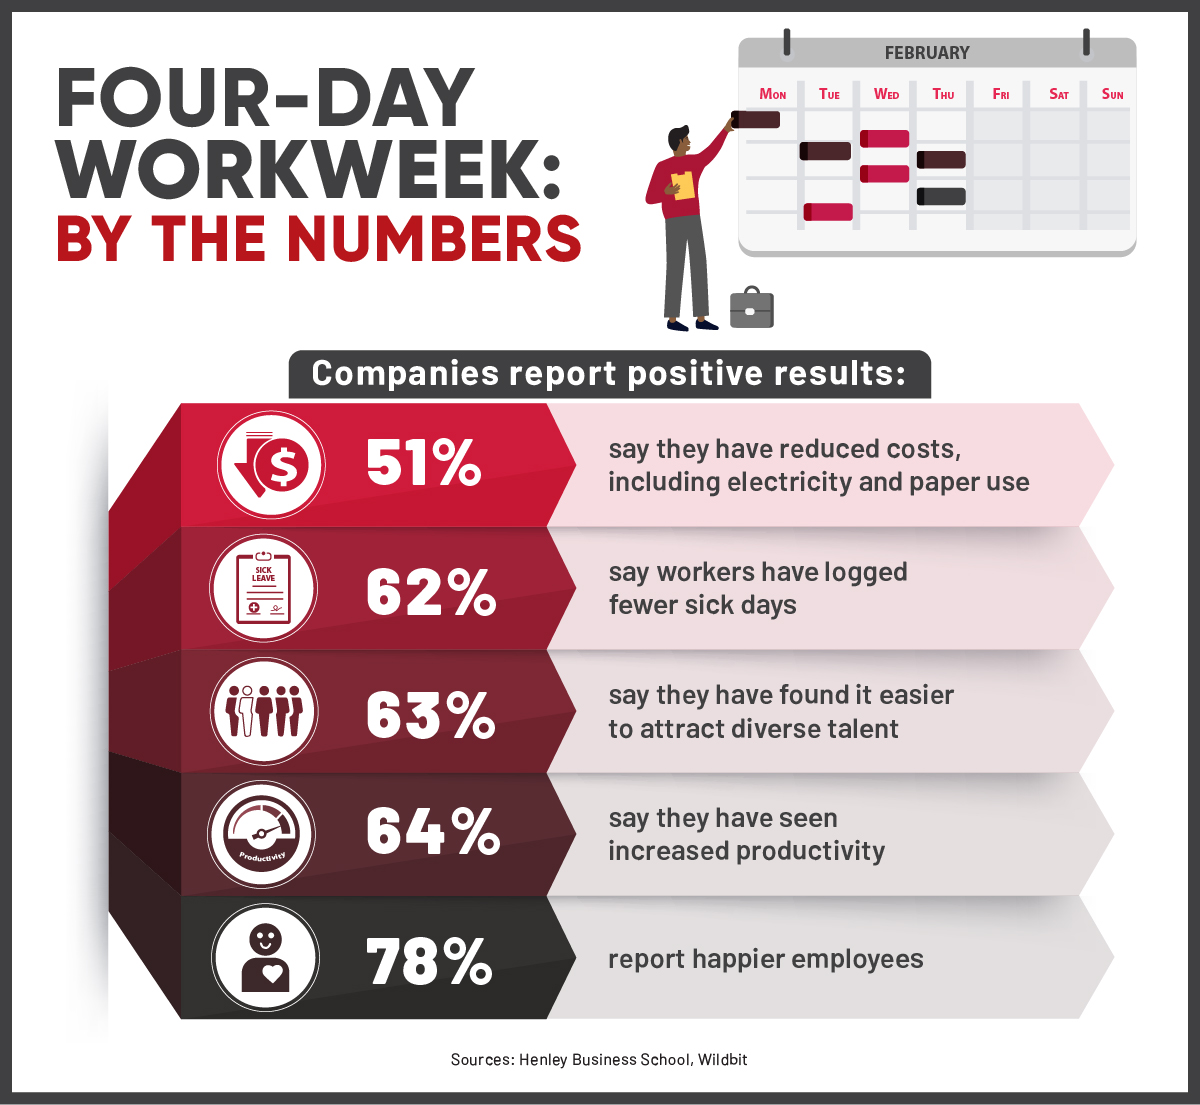 Statistics regarding the four-day workweek.